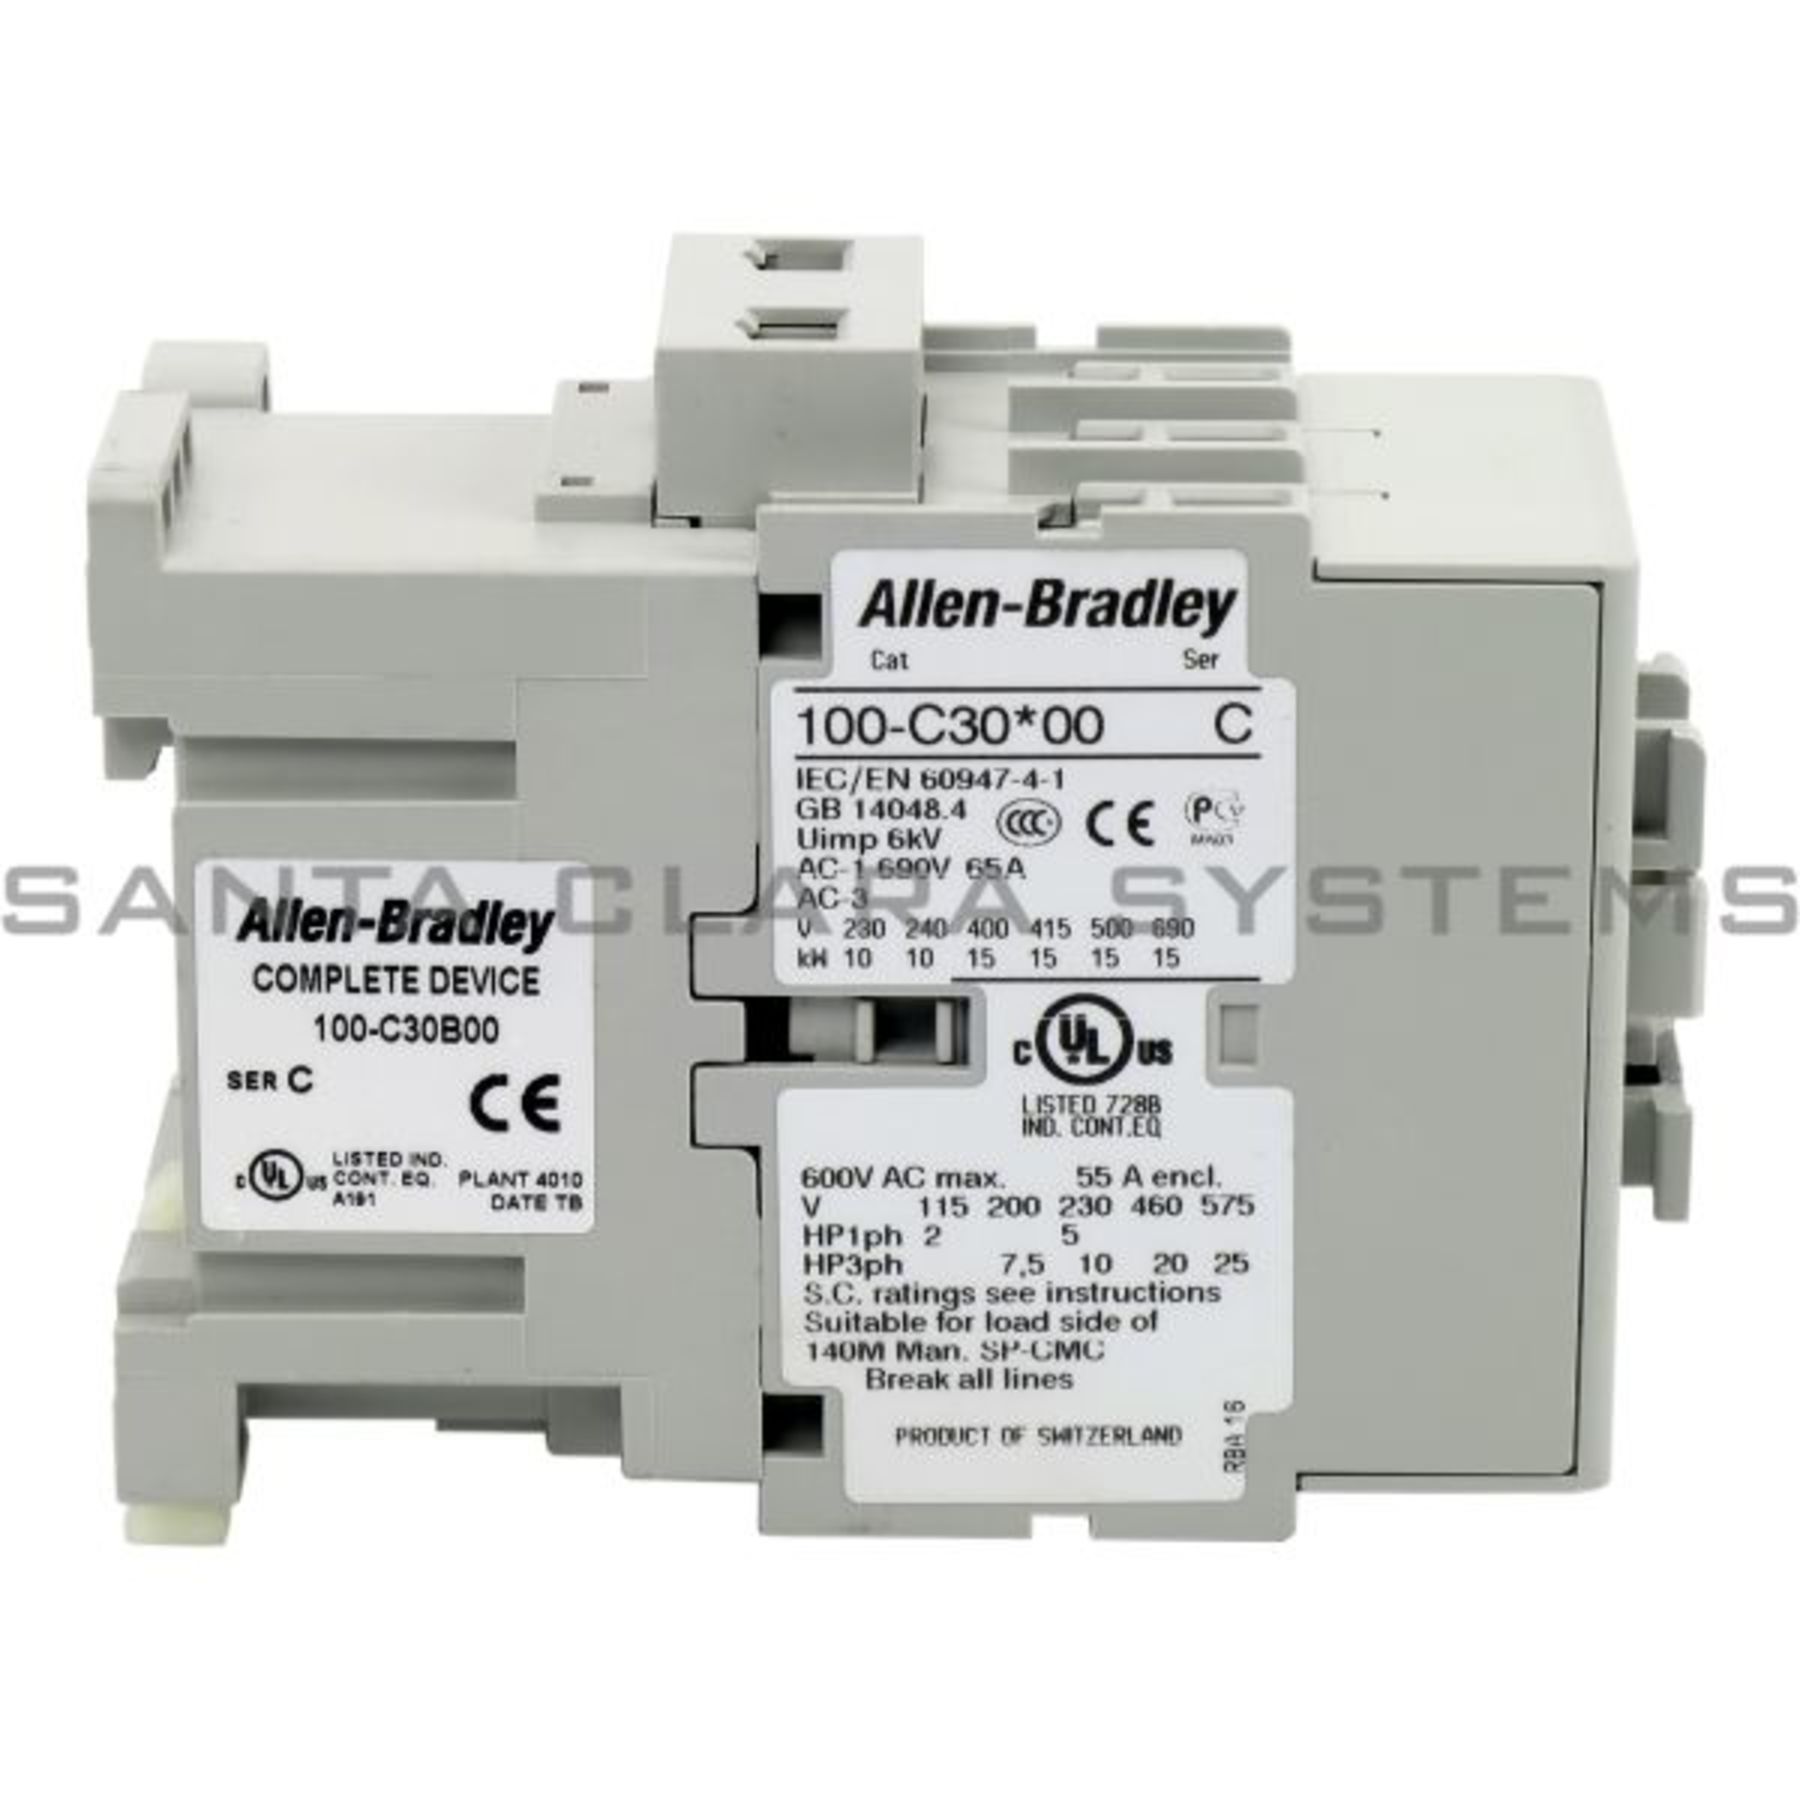 Allen Bradley 100-C30ub00 Series C,MCS-C Contactor 100-C30ub00